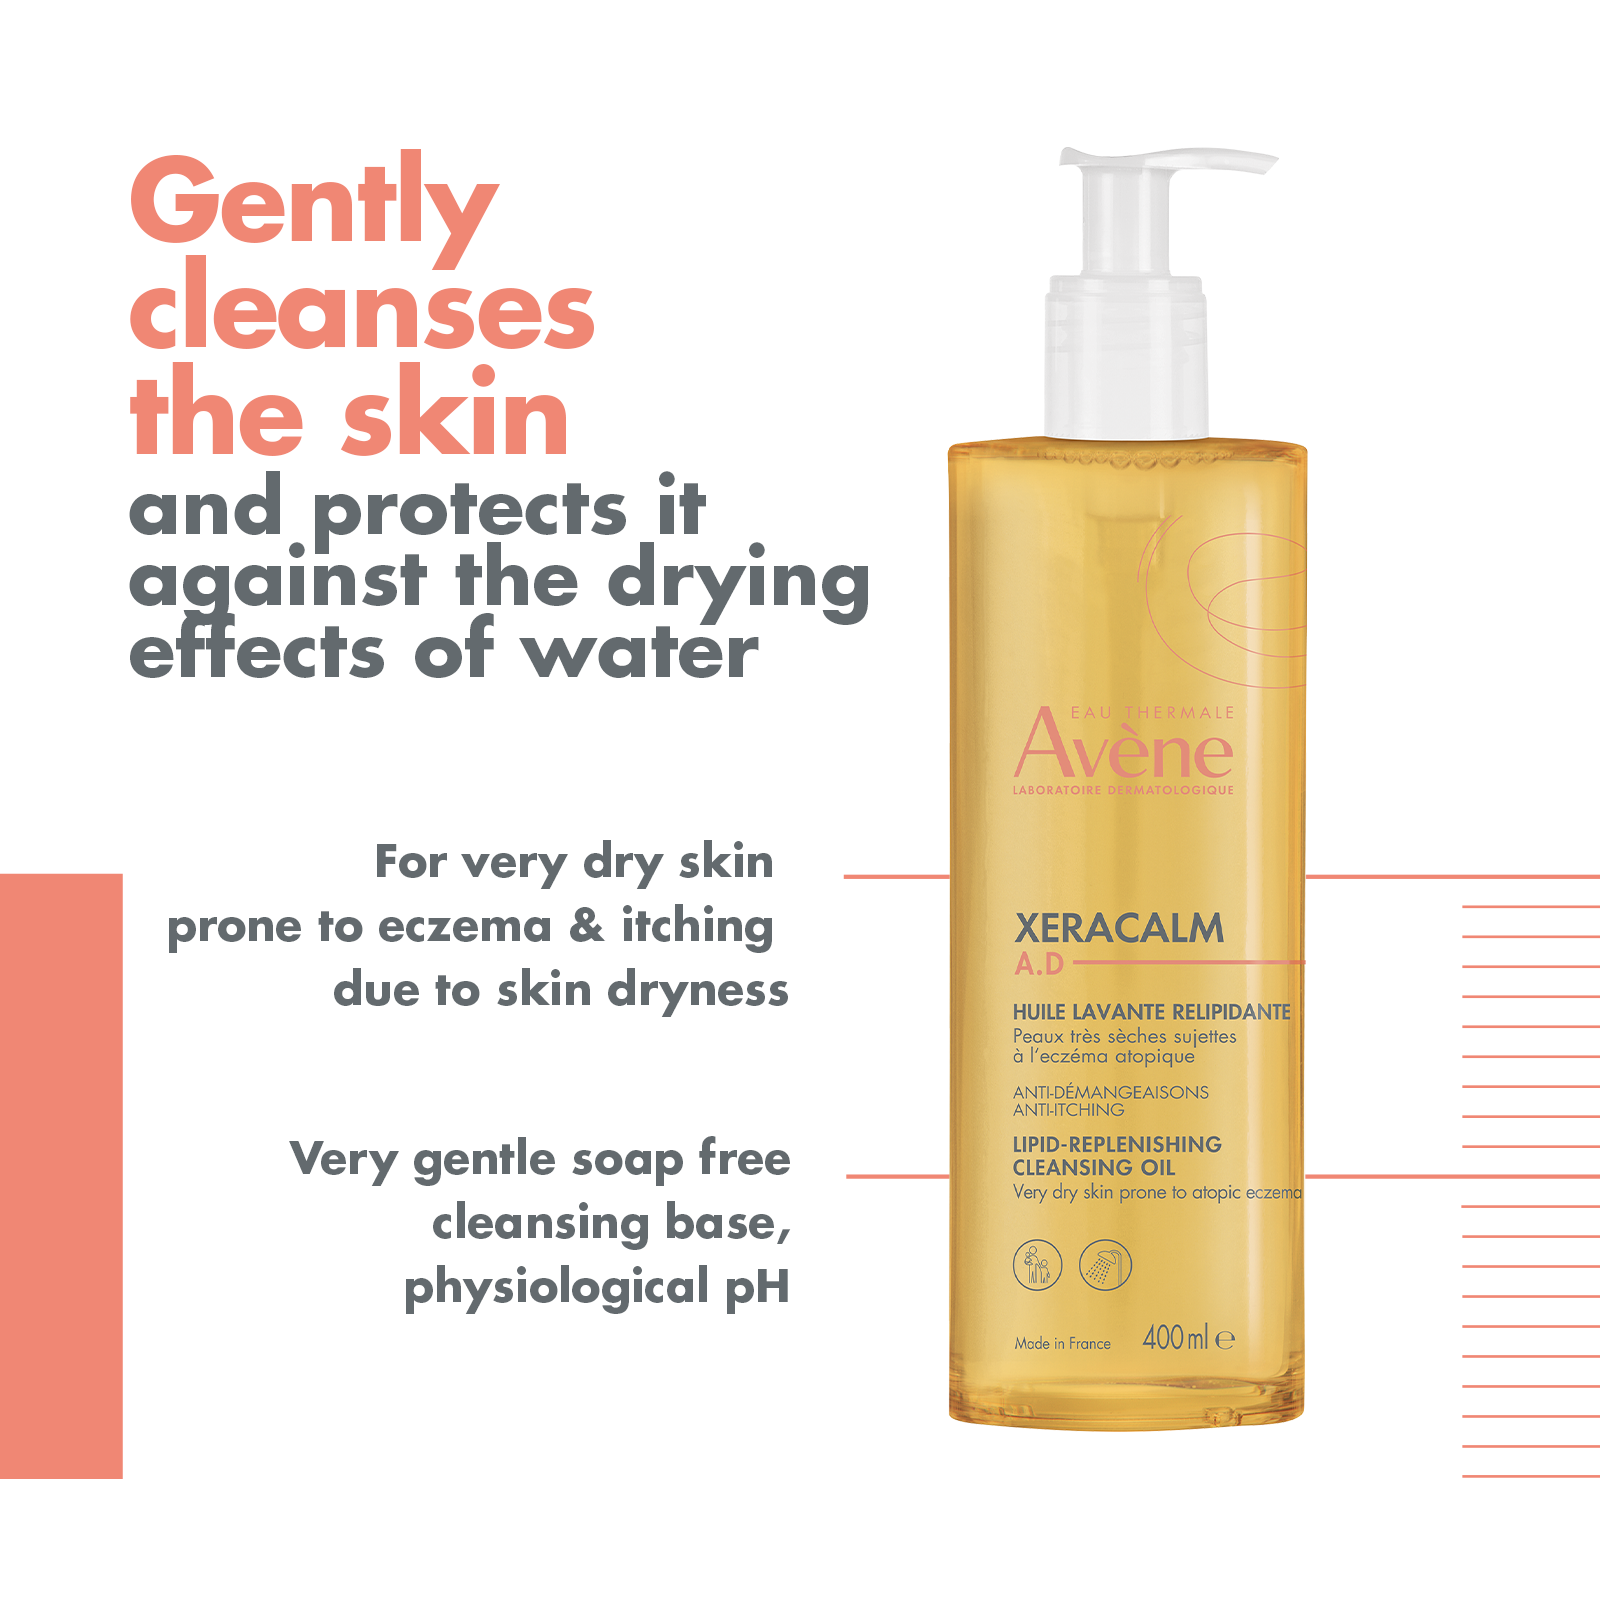 Avène XeraCalm A.D. Cleansing Oil 400ml - Cleanser for Eczema-prone Skin